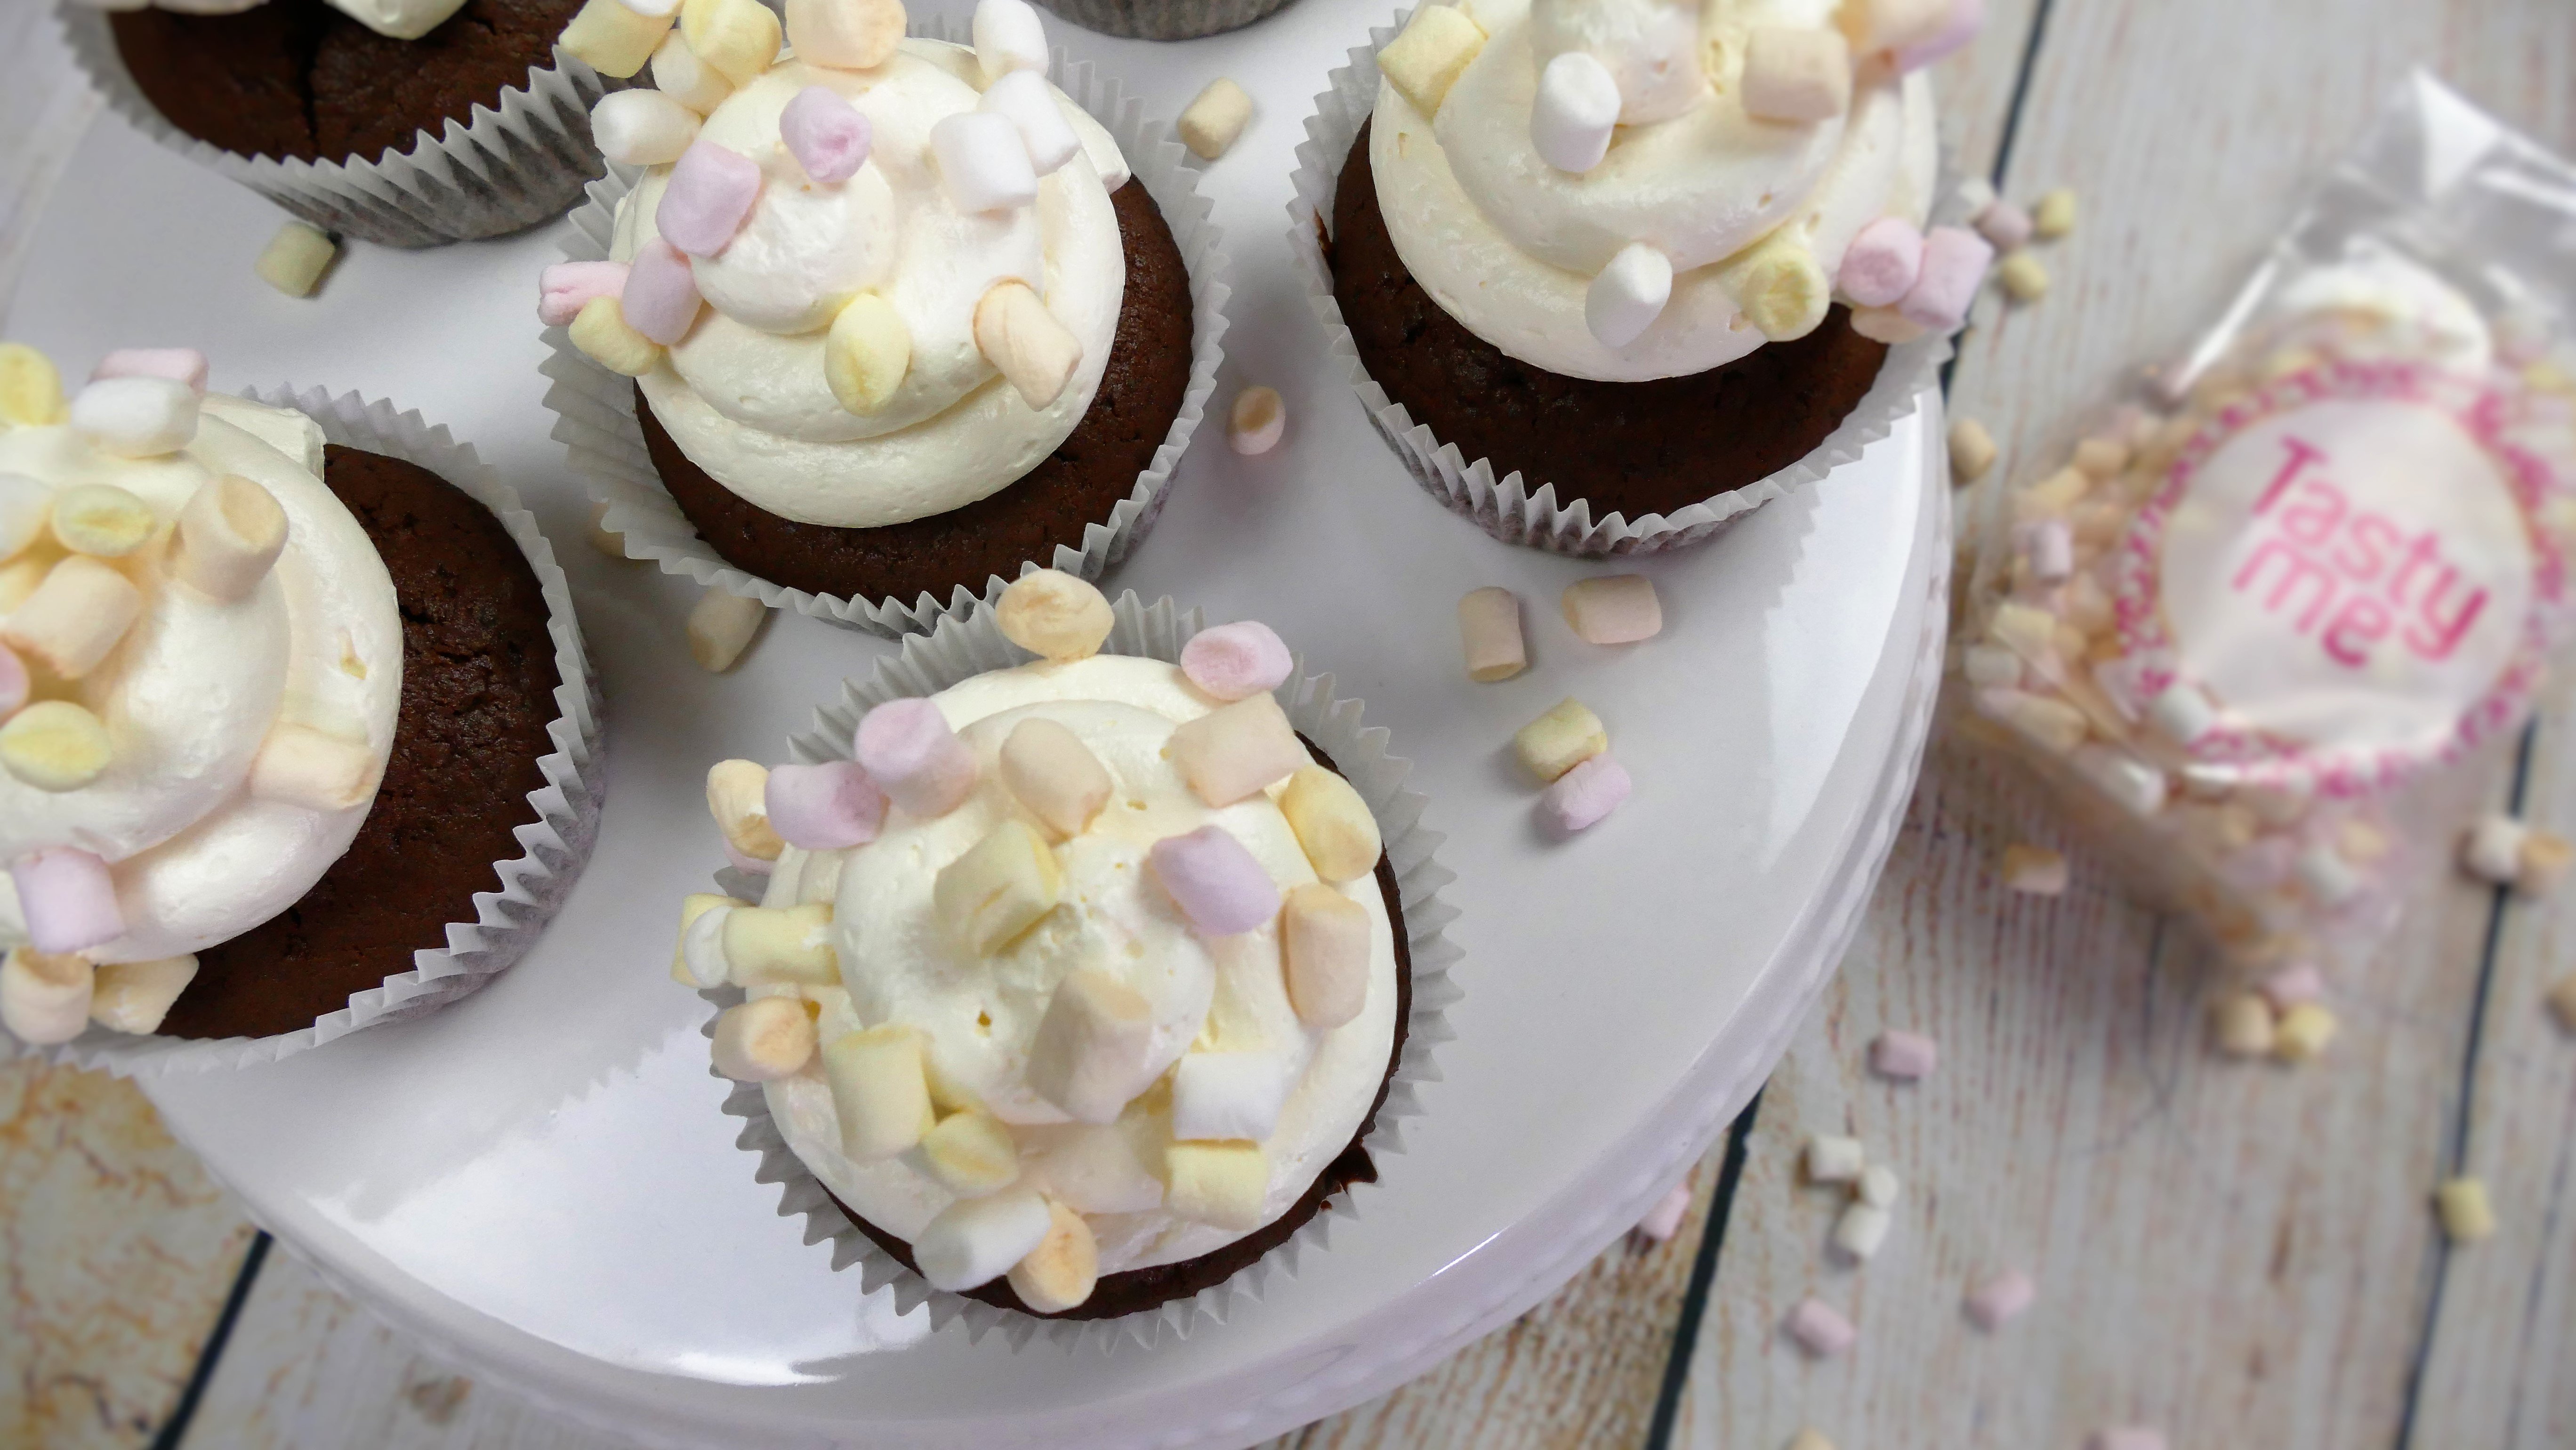 Schokocupcakes mit Marshmallow-Cremefrosting